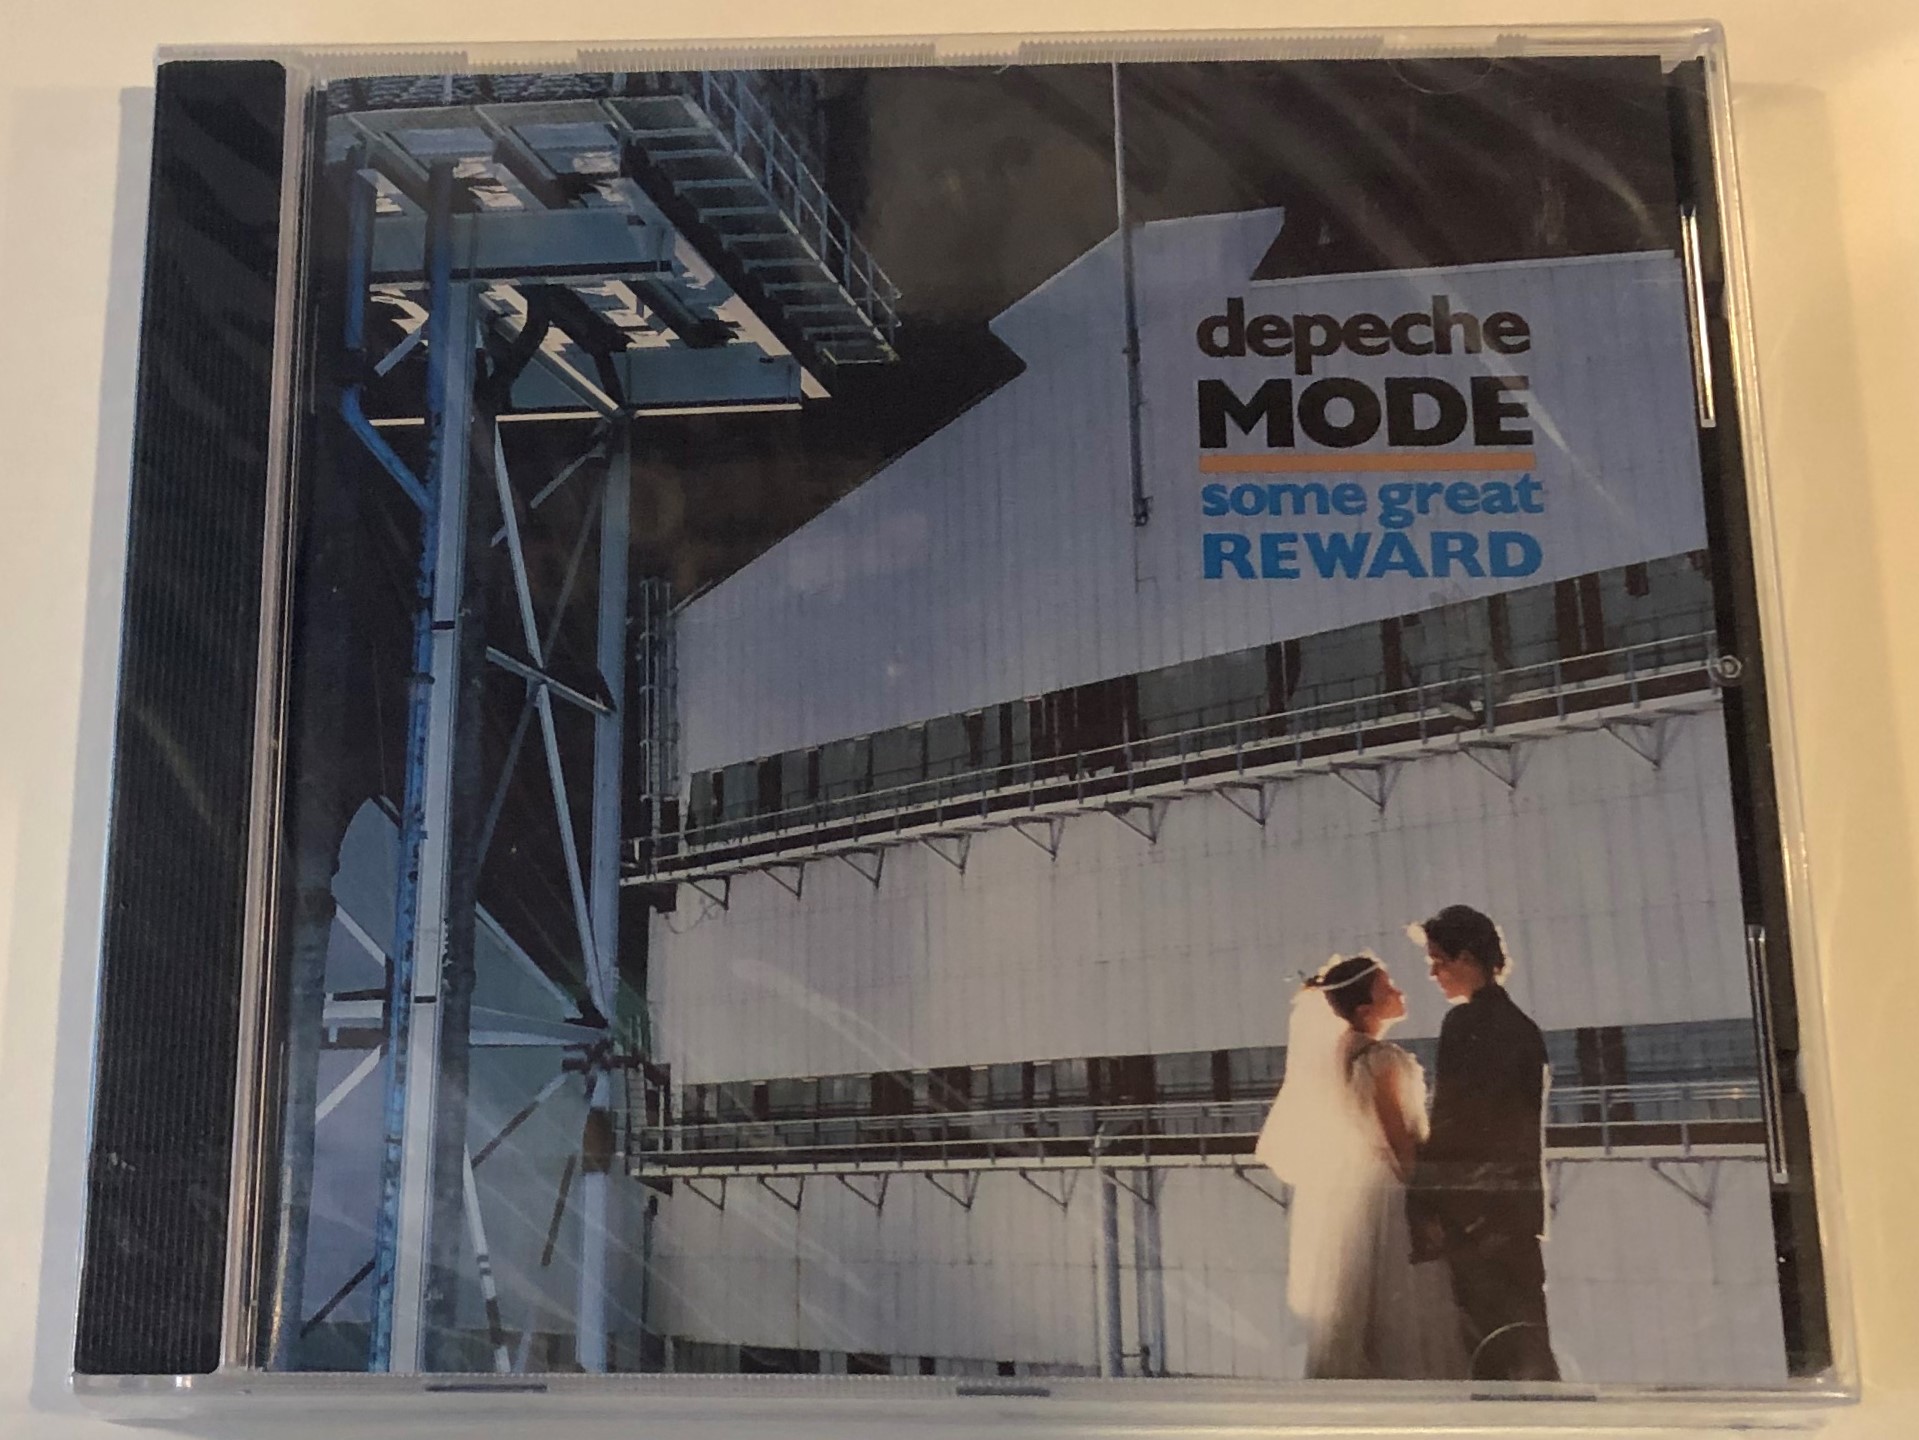 depeche-mode-some-great-reward-sony-music-audio-cd-2006-88883750552-1-.jpg